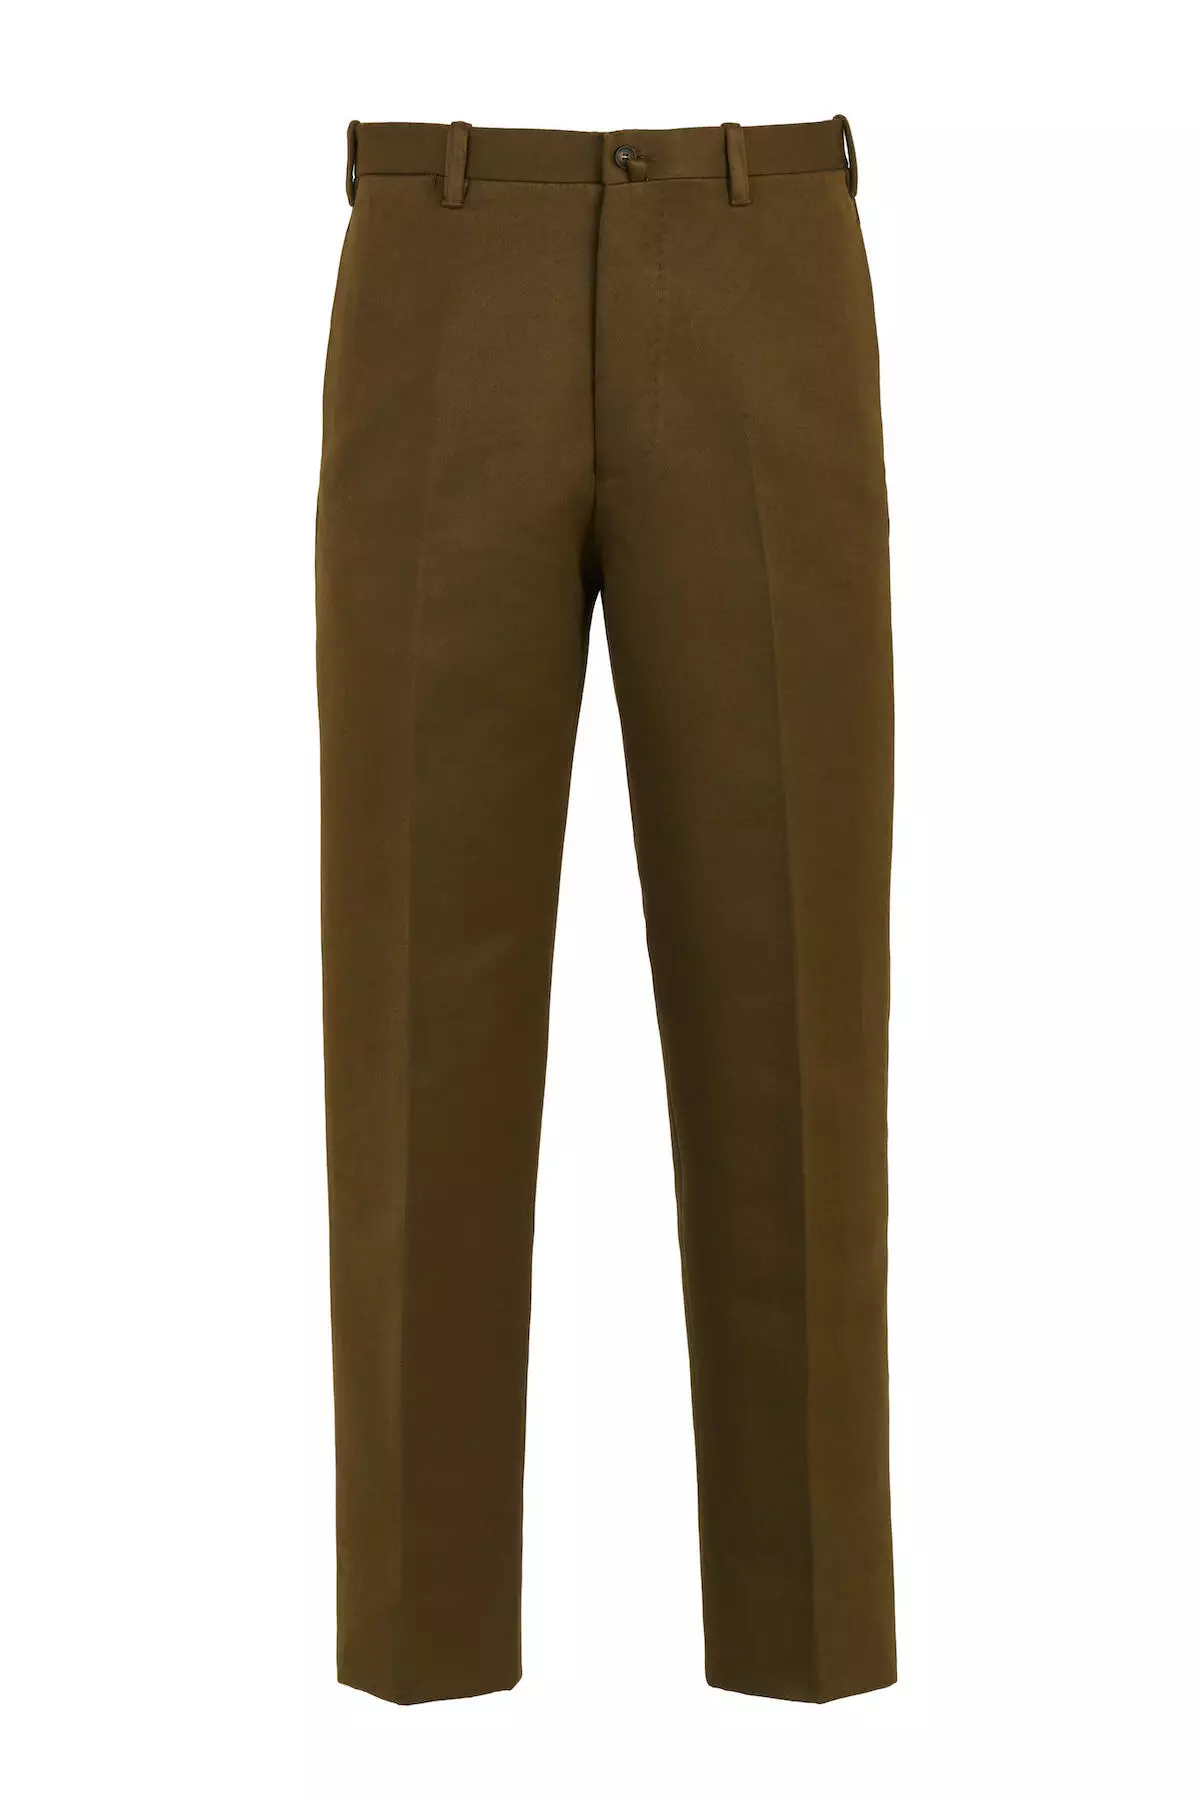 Men Coffee Brown Trousers - Buy Men Coffee Brown Trousers online in India-vachngandaiphat.com.vn